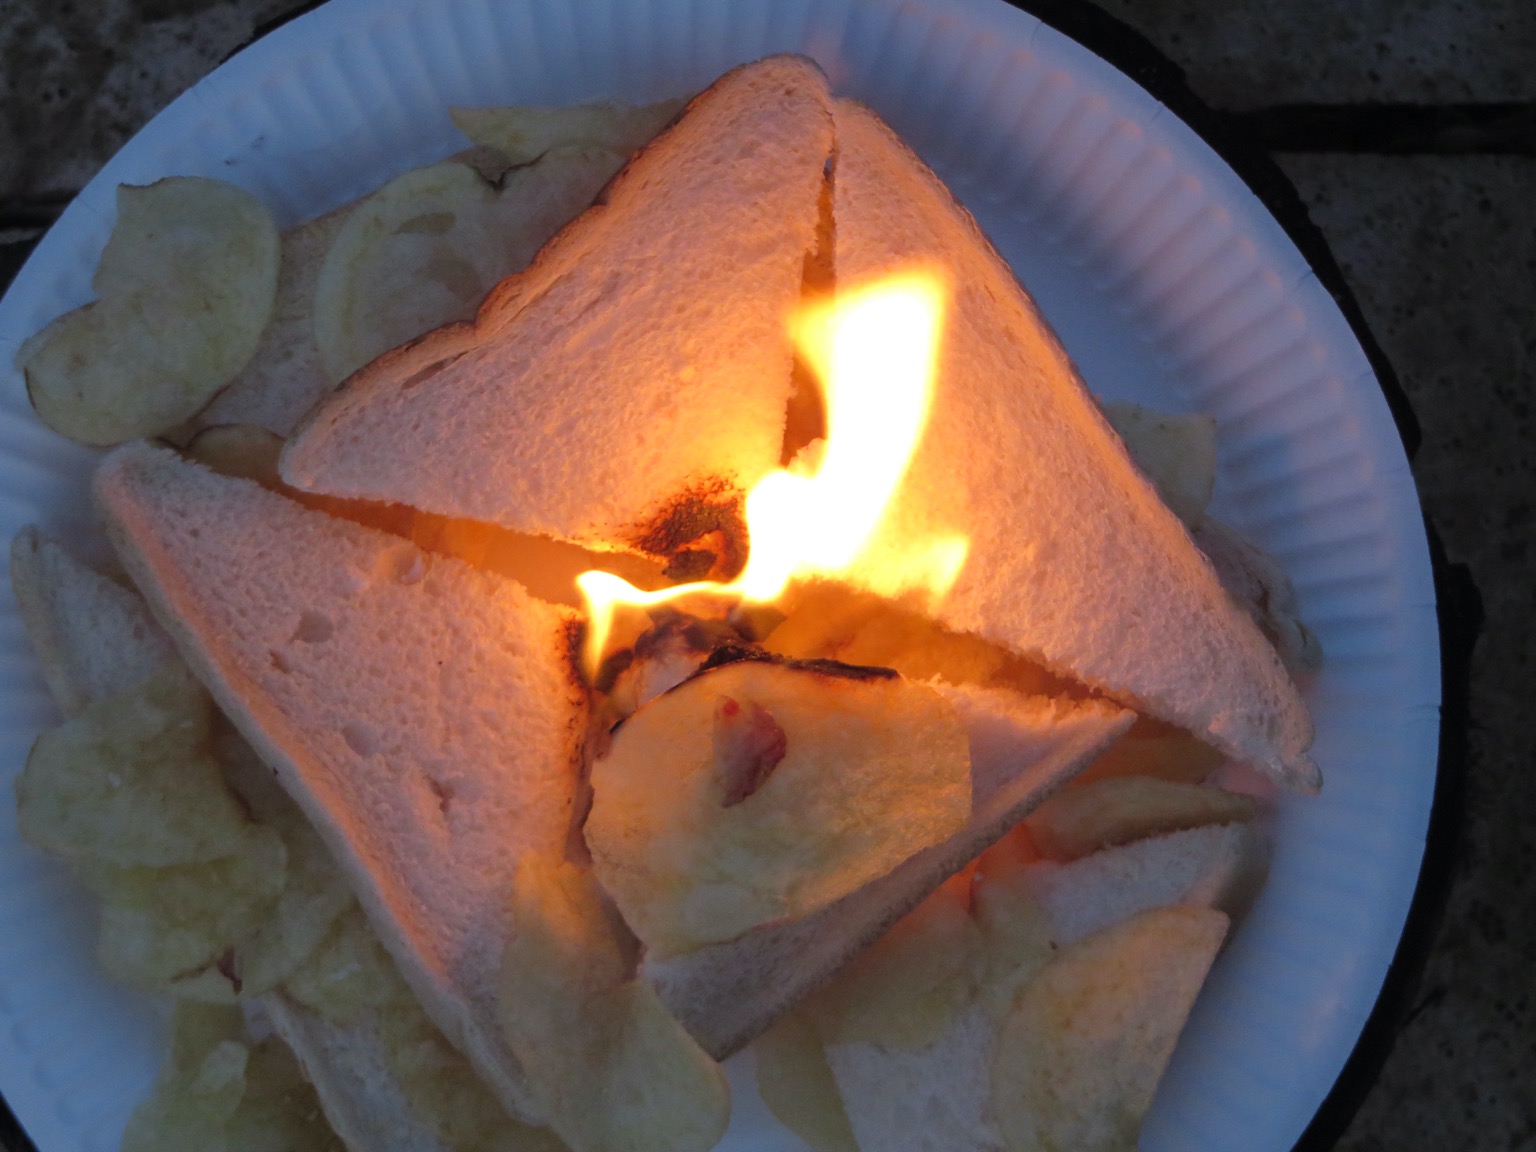 Burning crisp sandwich on a paper plate